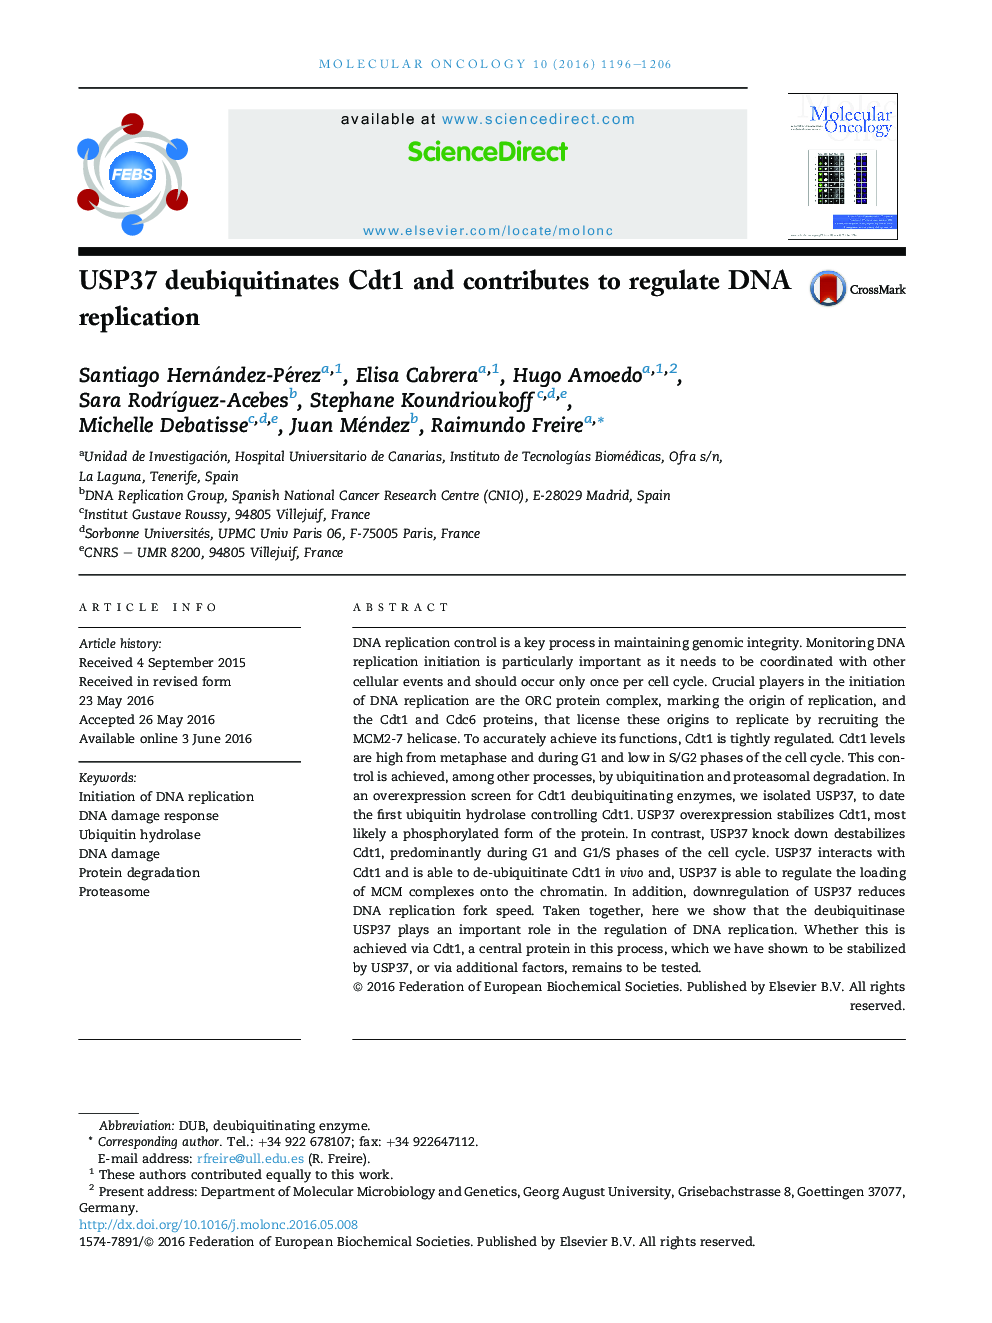 USP37 deubiquitinates Cdt1 and contributes to regulate DNA replication